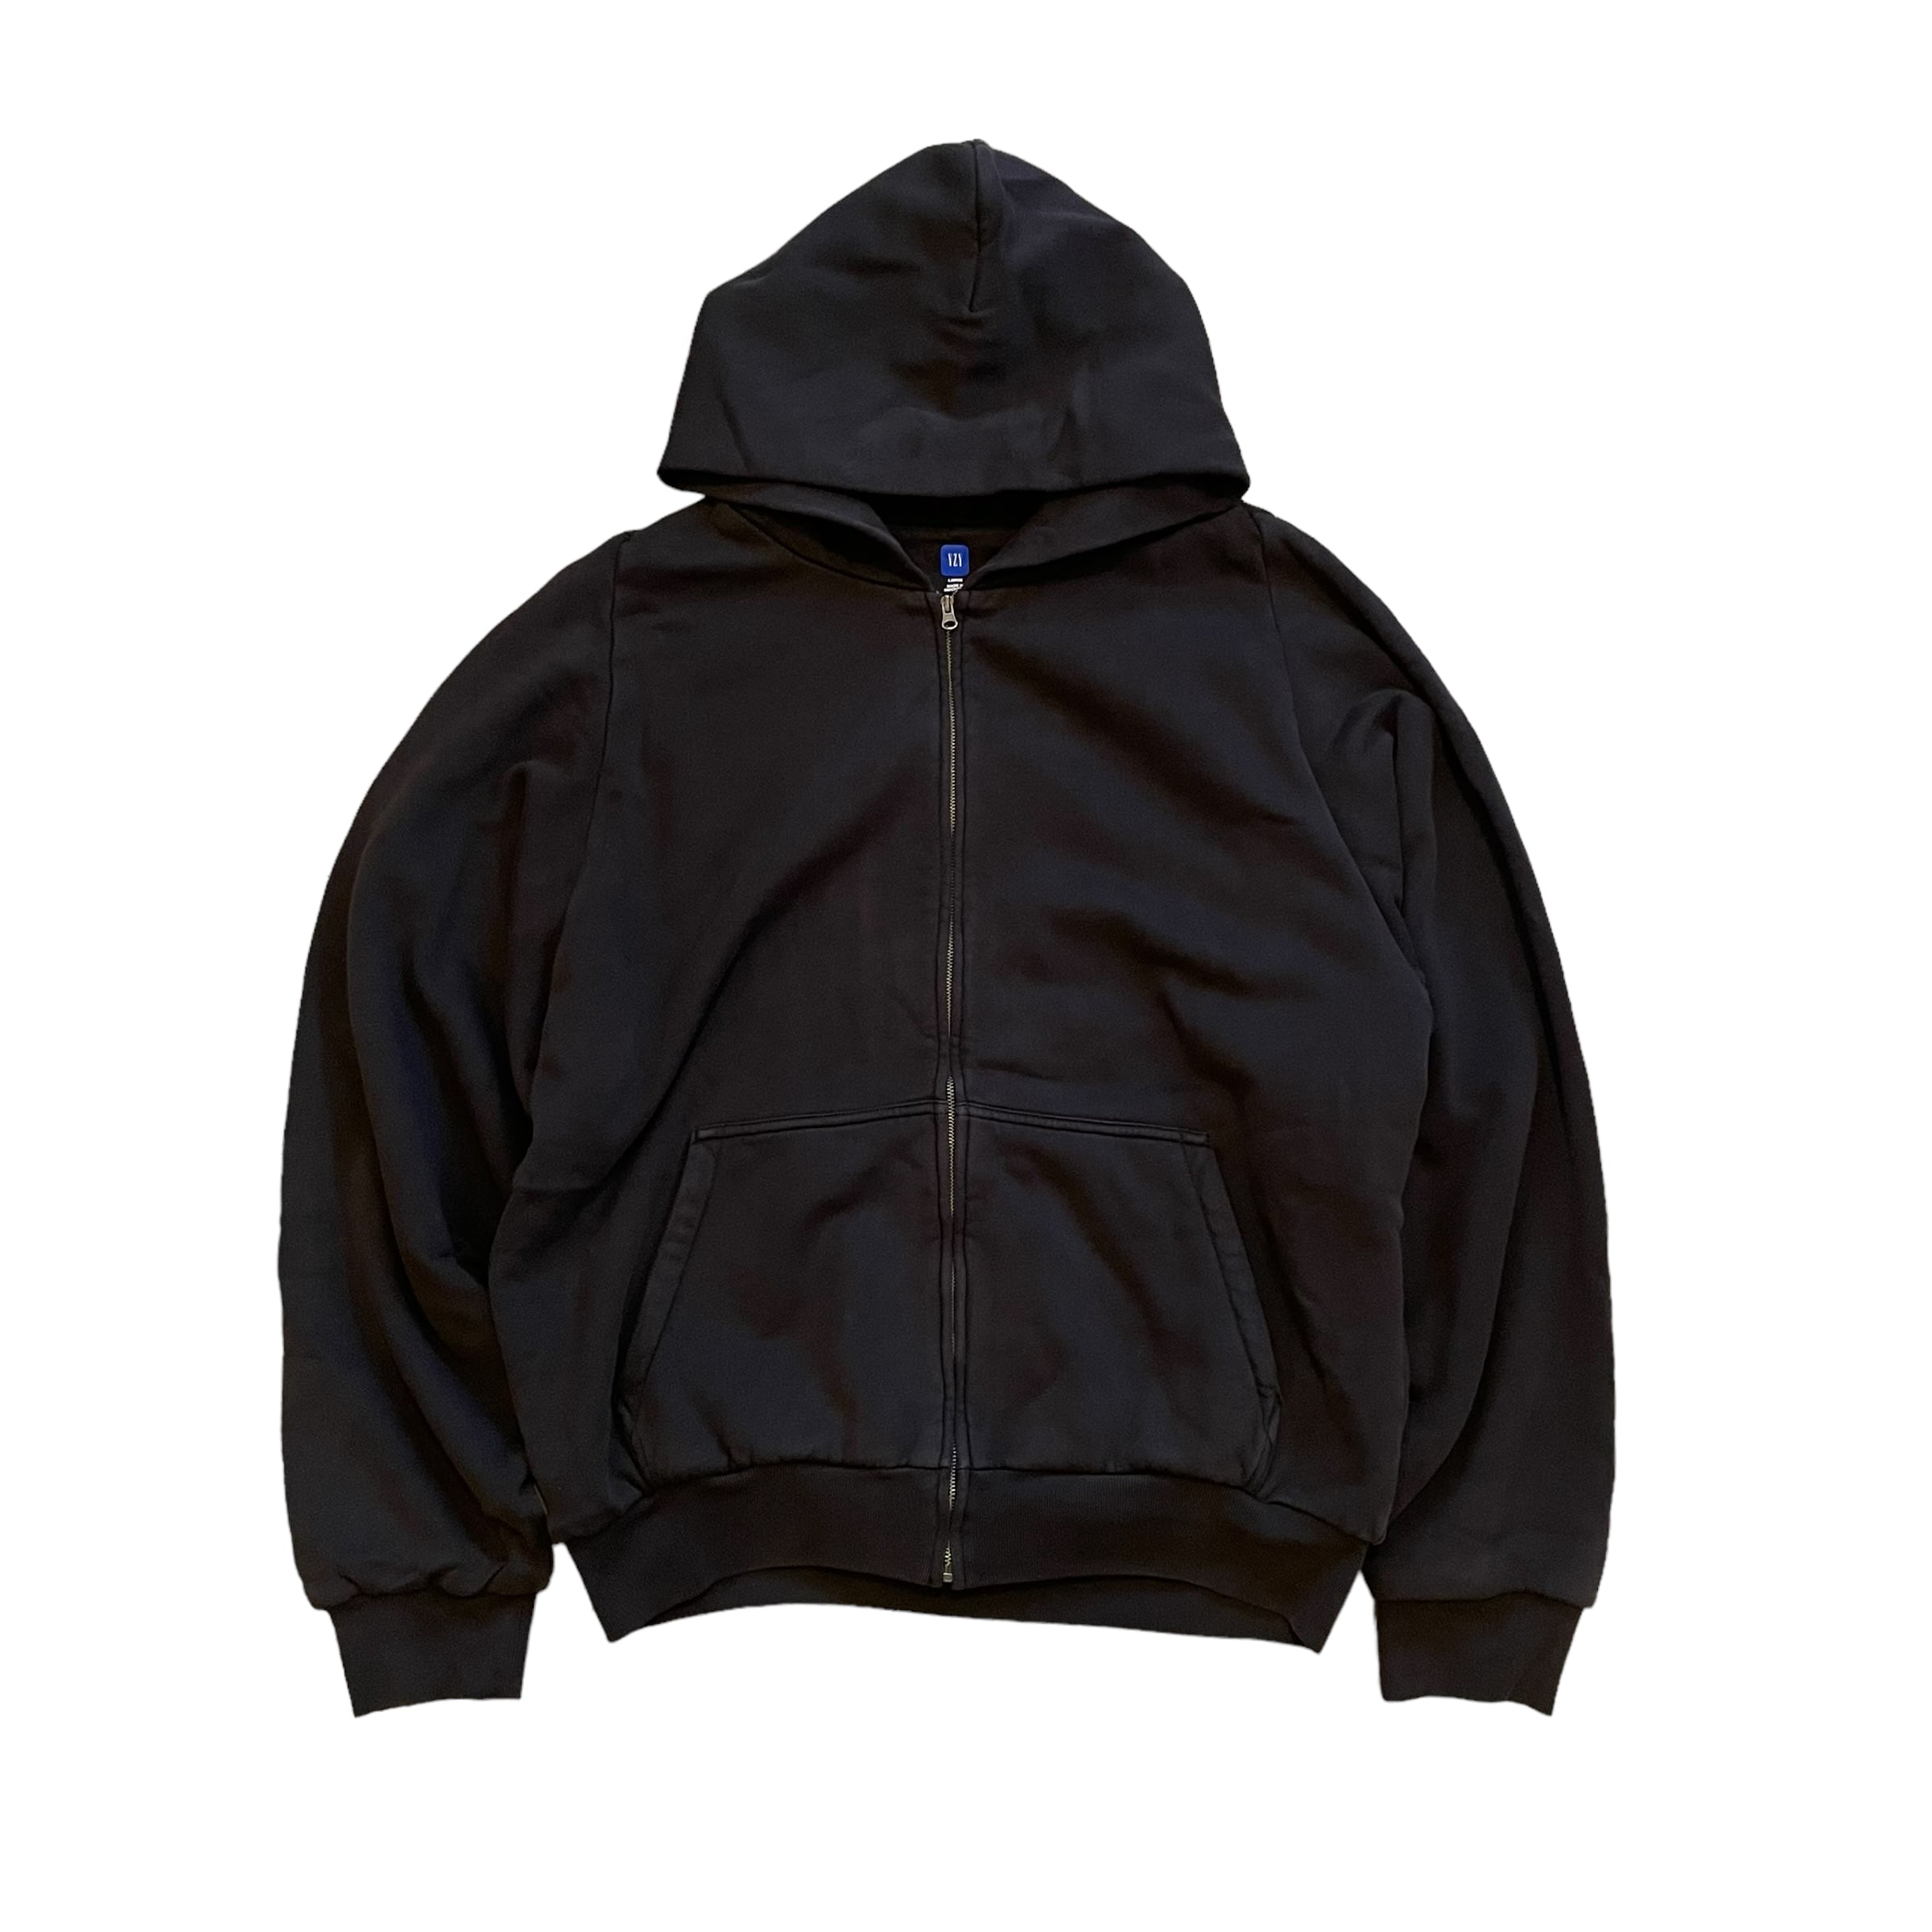 Yeezy Gap zip up hoodie poetic black身幅61センチ